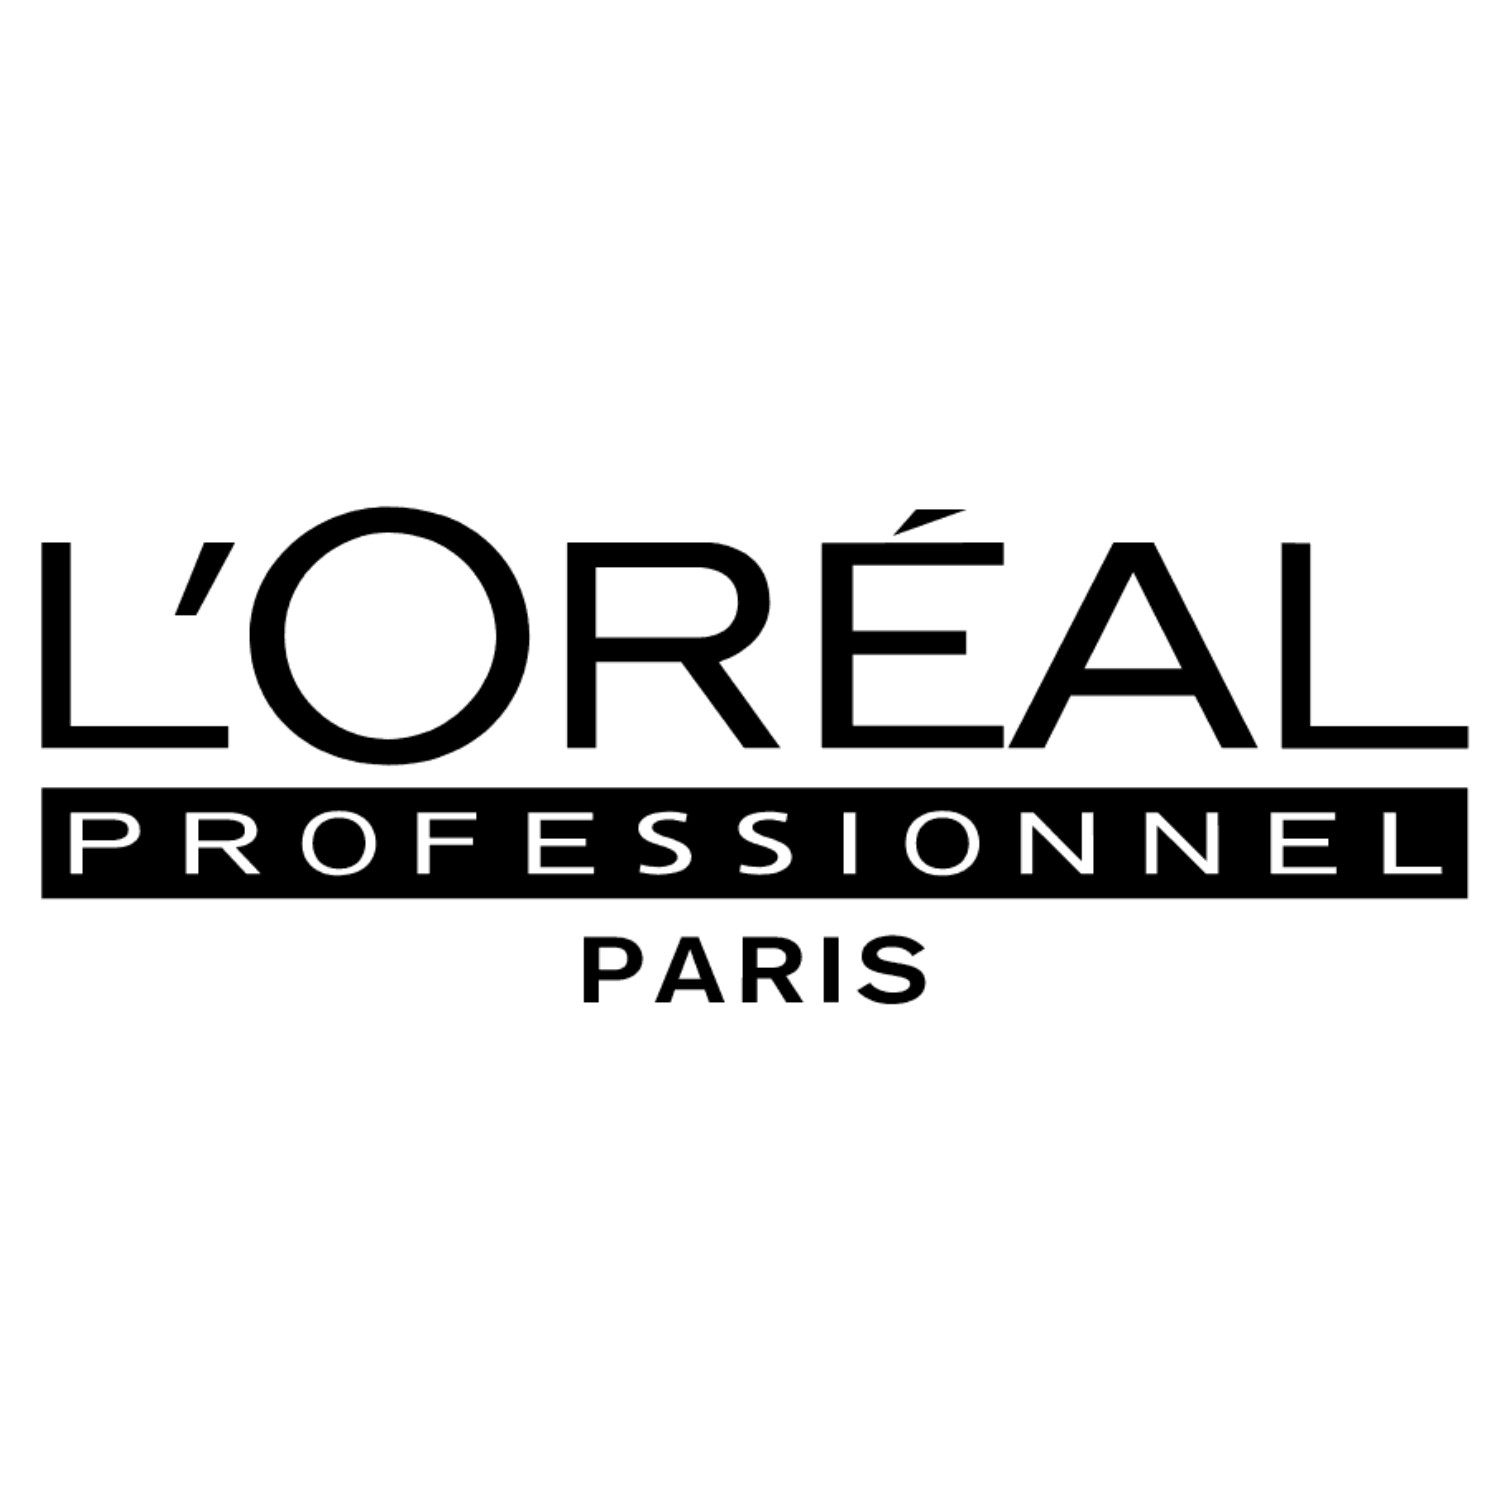 L'Oreal professional